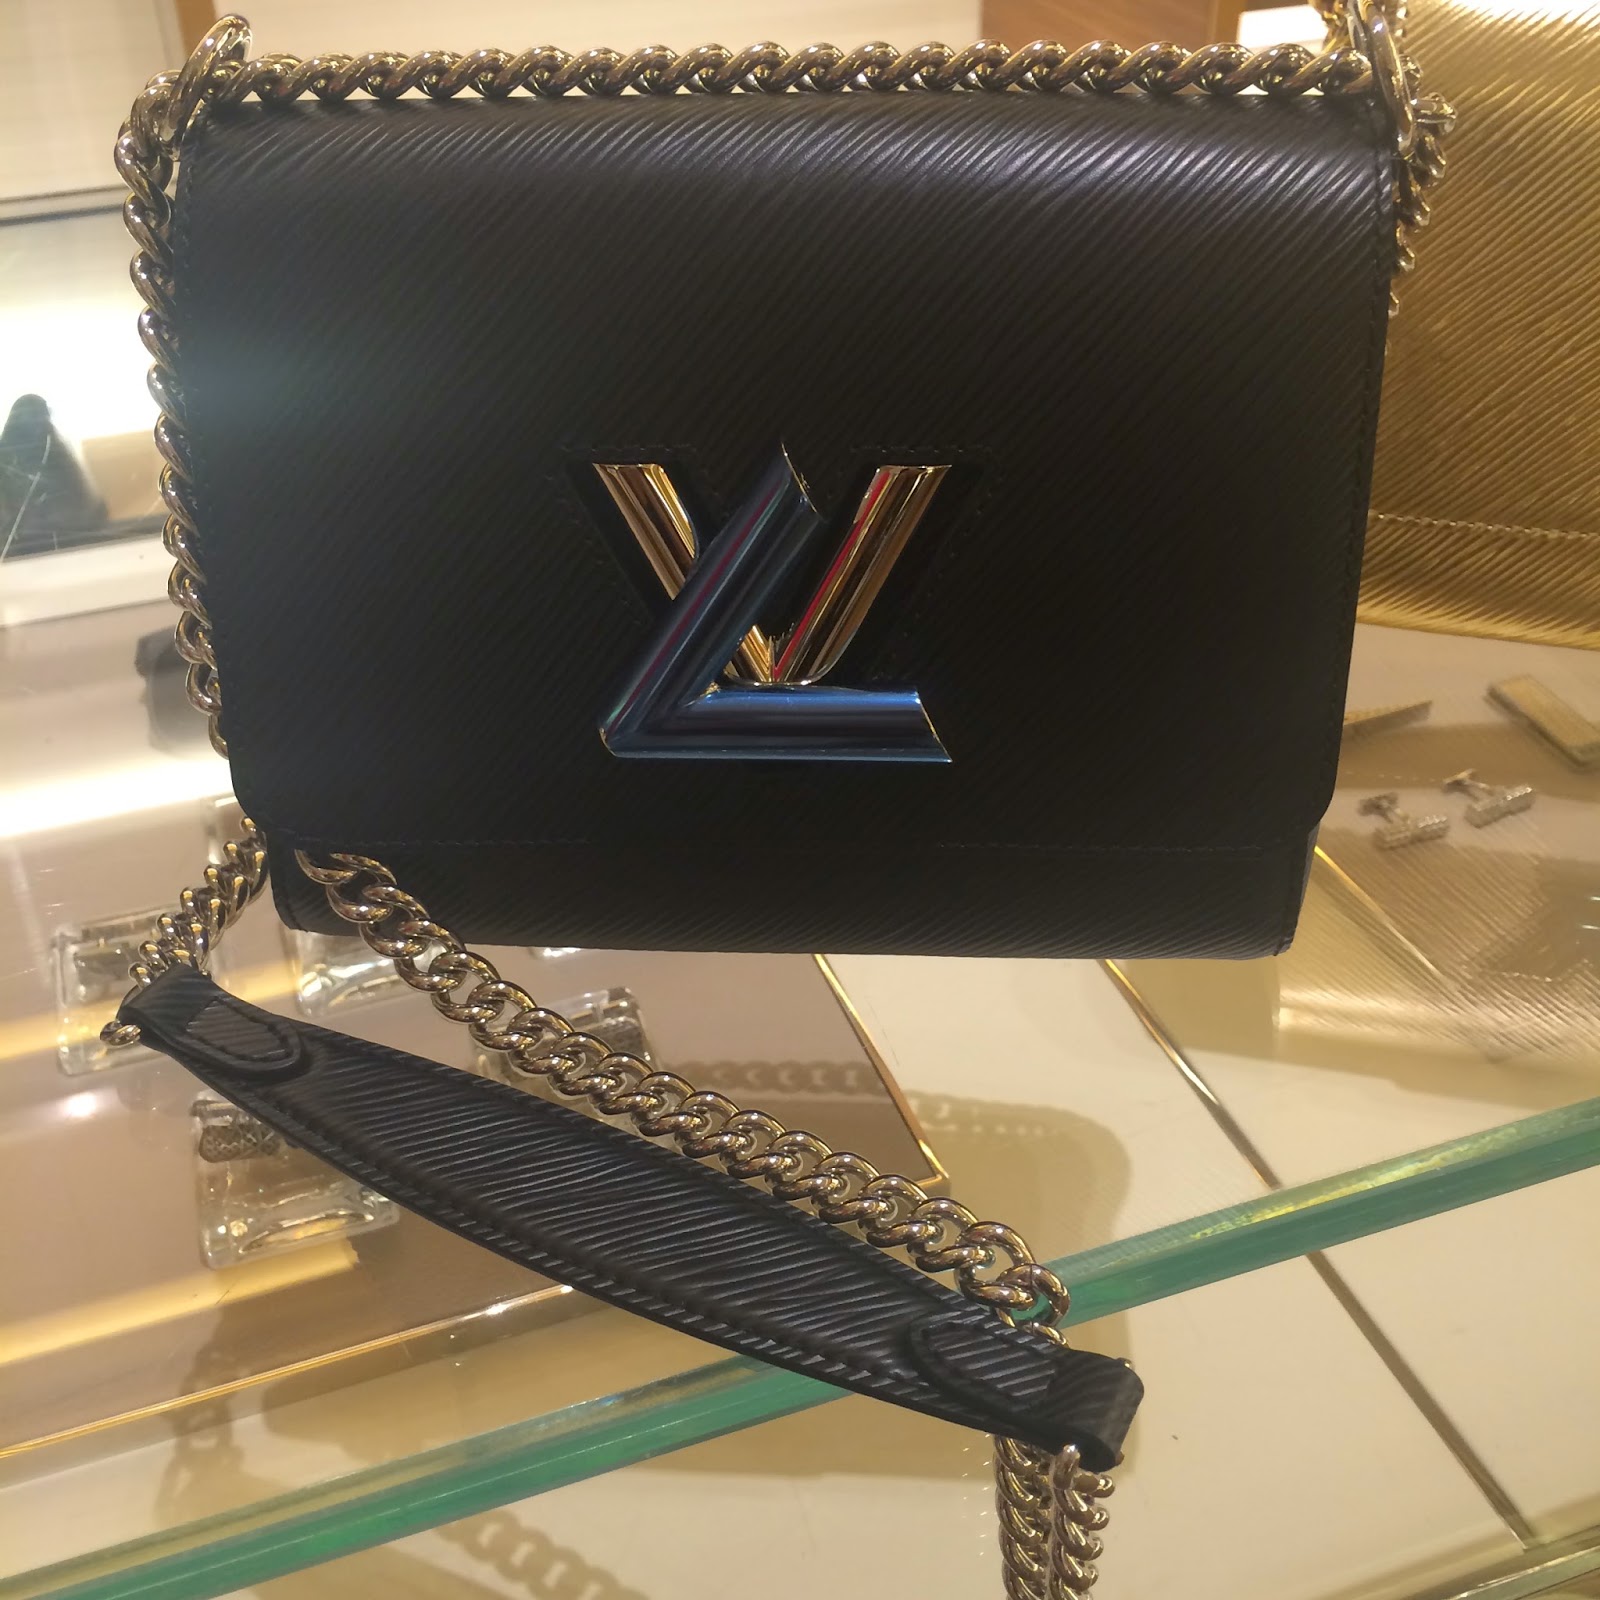 Mundane, humdrum drone: New Louis Vuitton Twist Epi & and Mask series handbags..